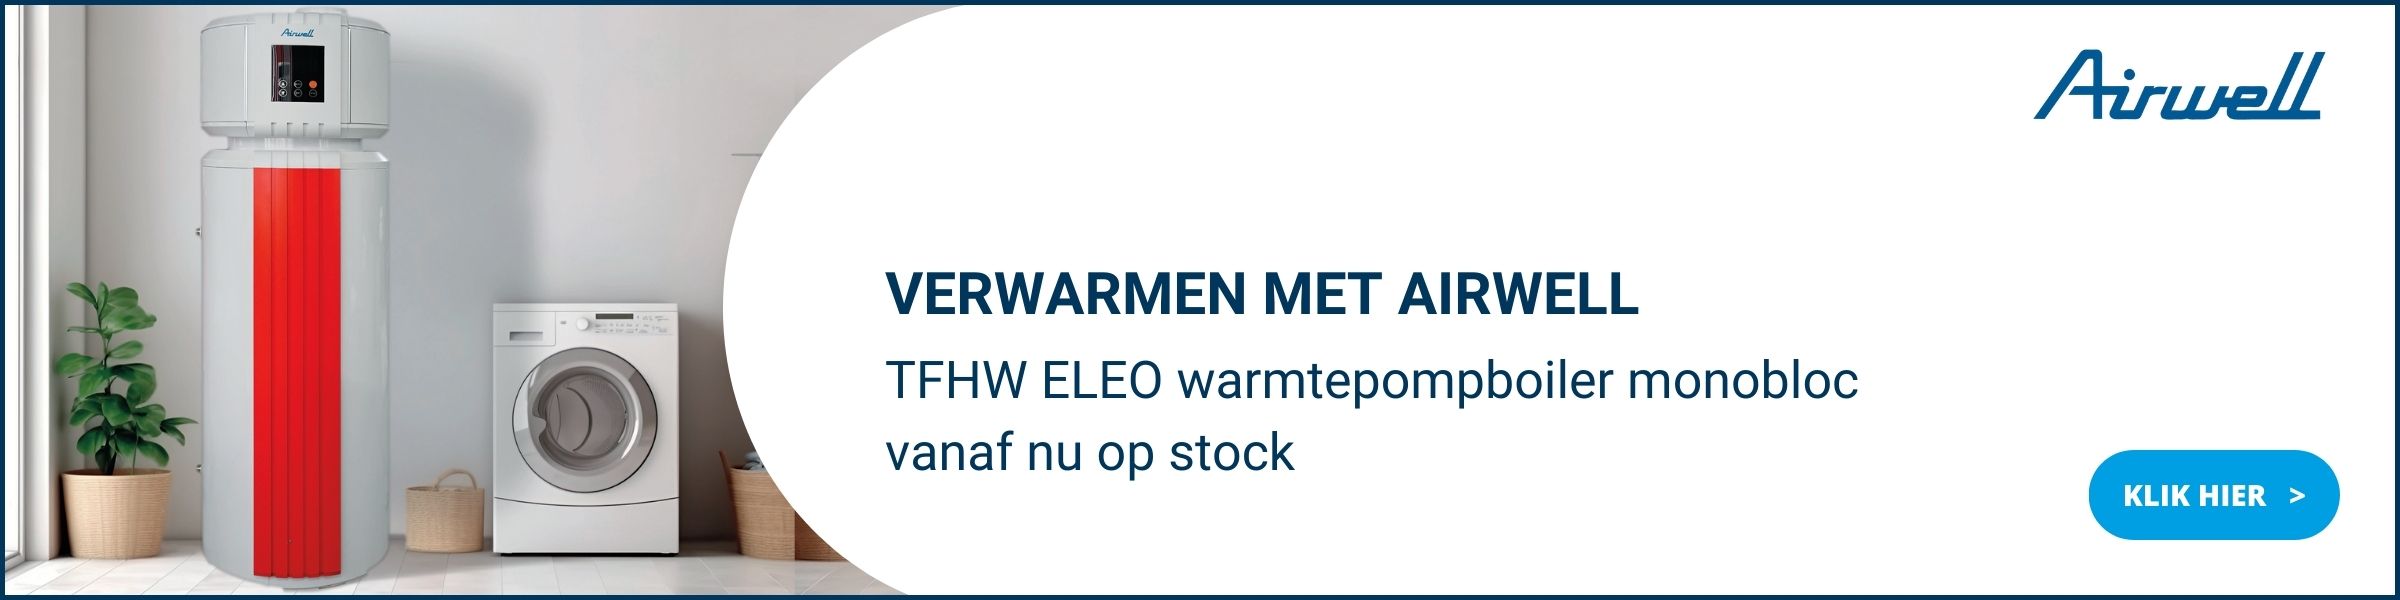 airwell homepage banner BLUE_NL.jpg